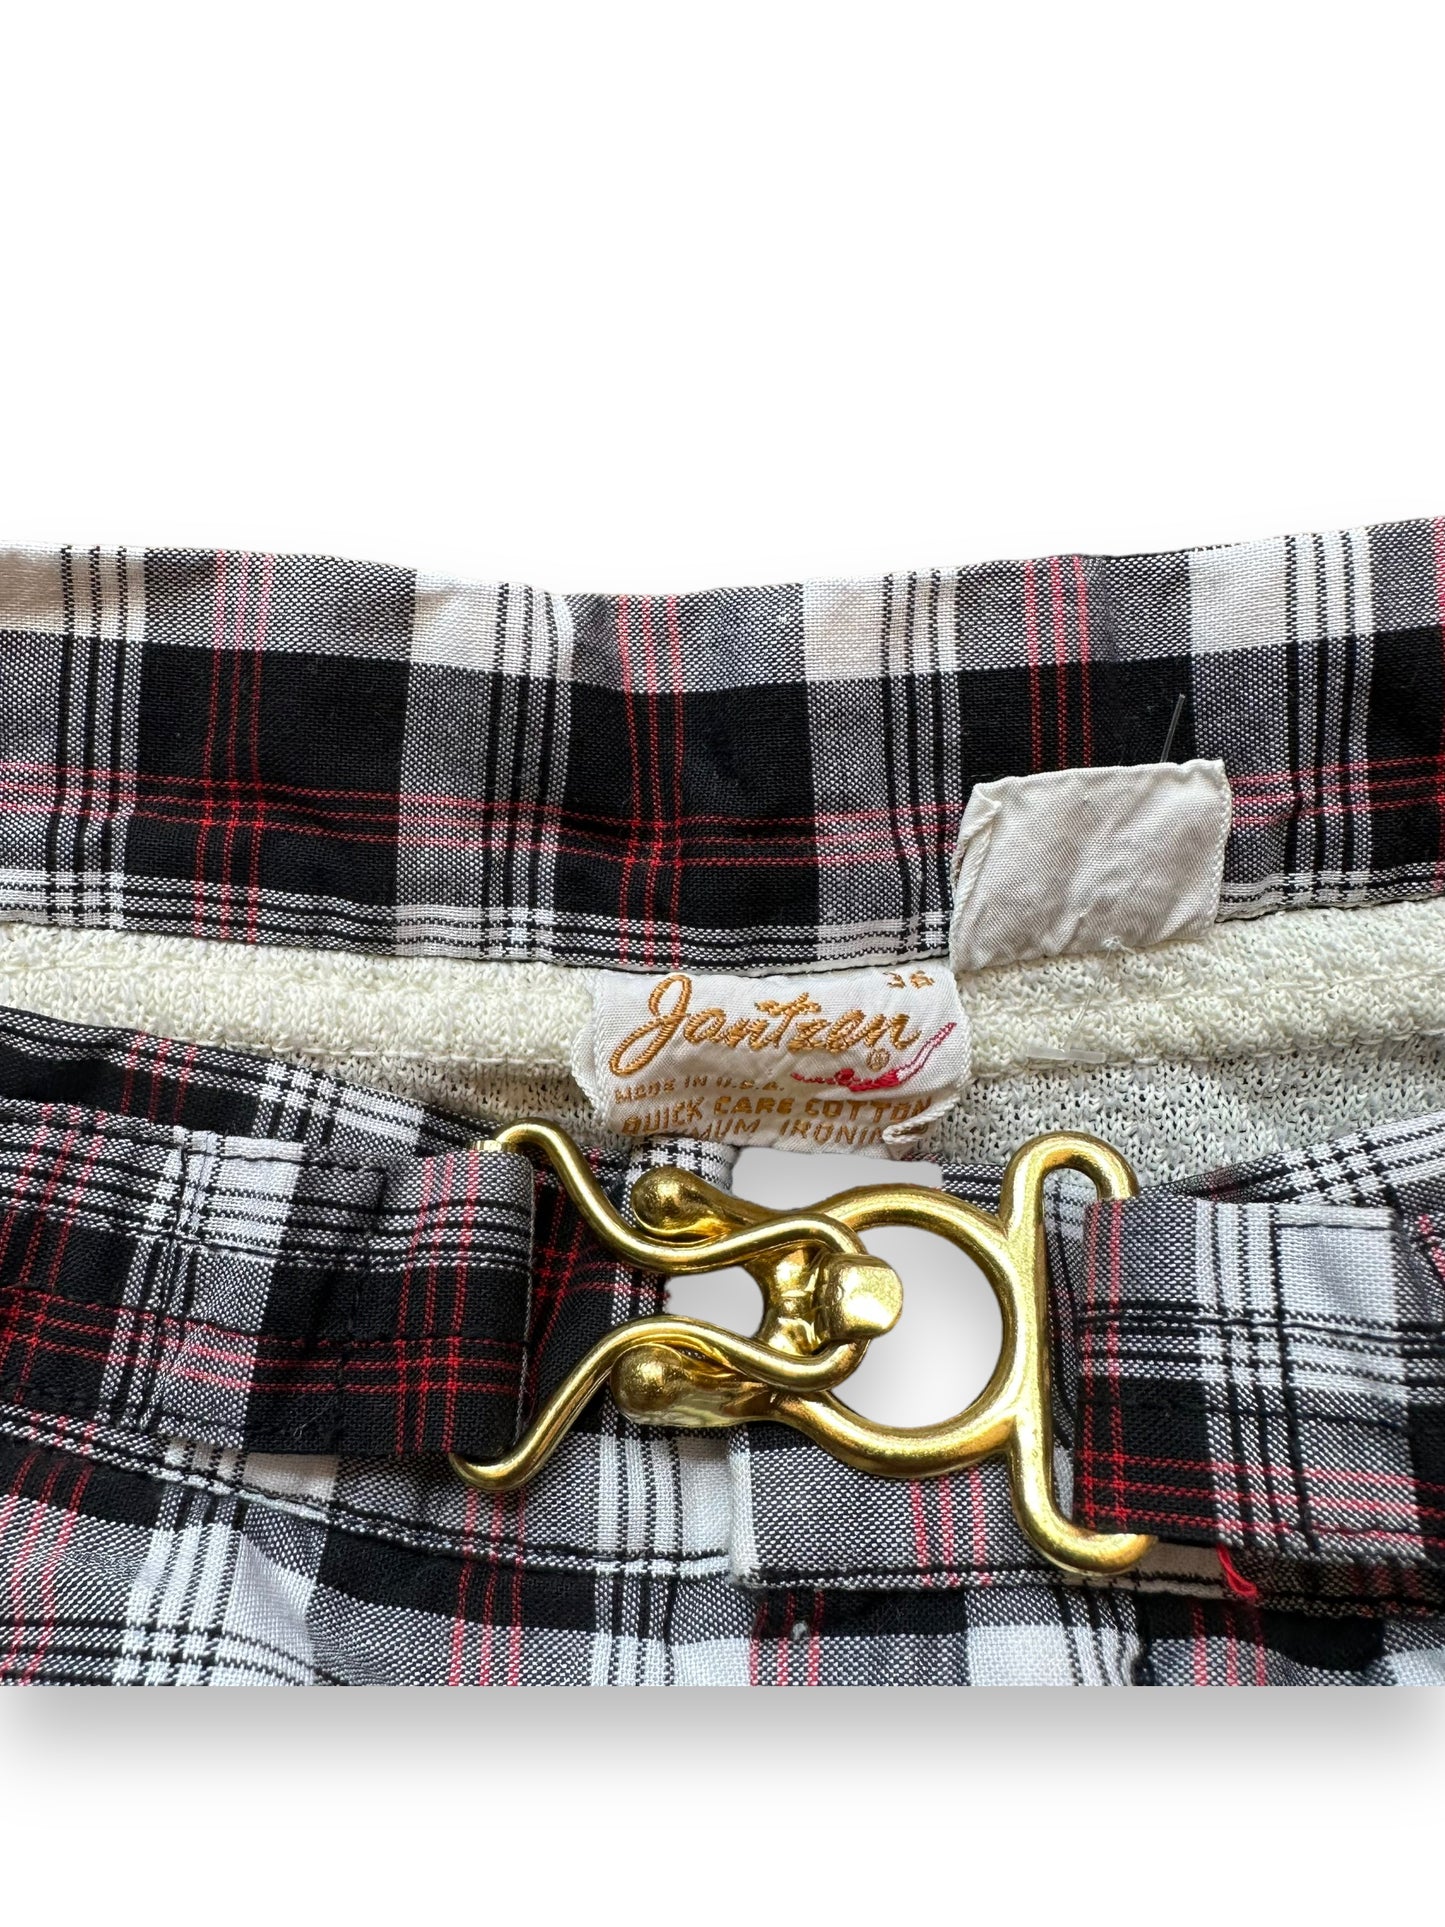 Shorts buckle on Vintage Jantzen Quick Care Cotton 3 Piece Cabana Set | Barn Owl Vintage Seattle | Vintage Beachwear Seattle